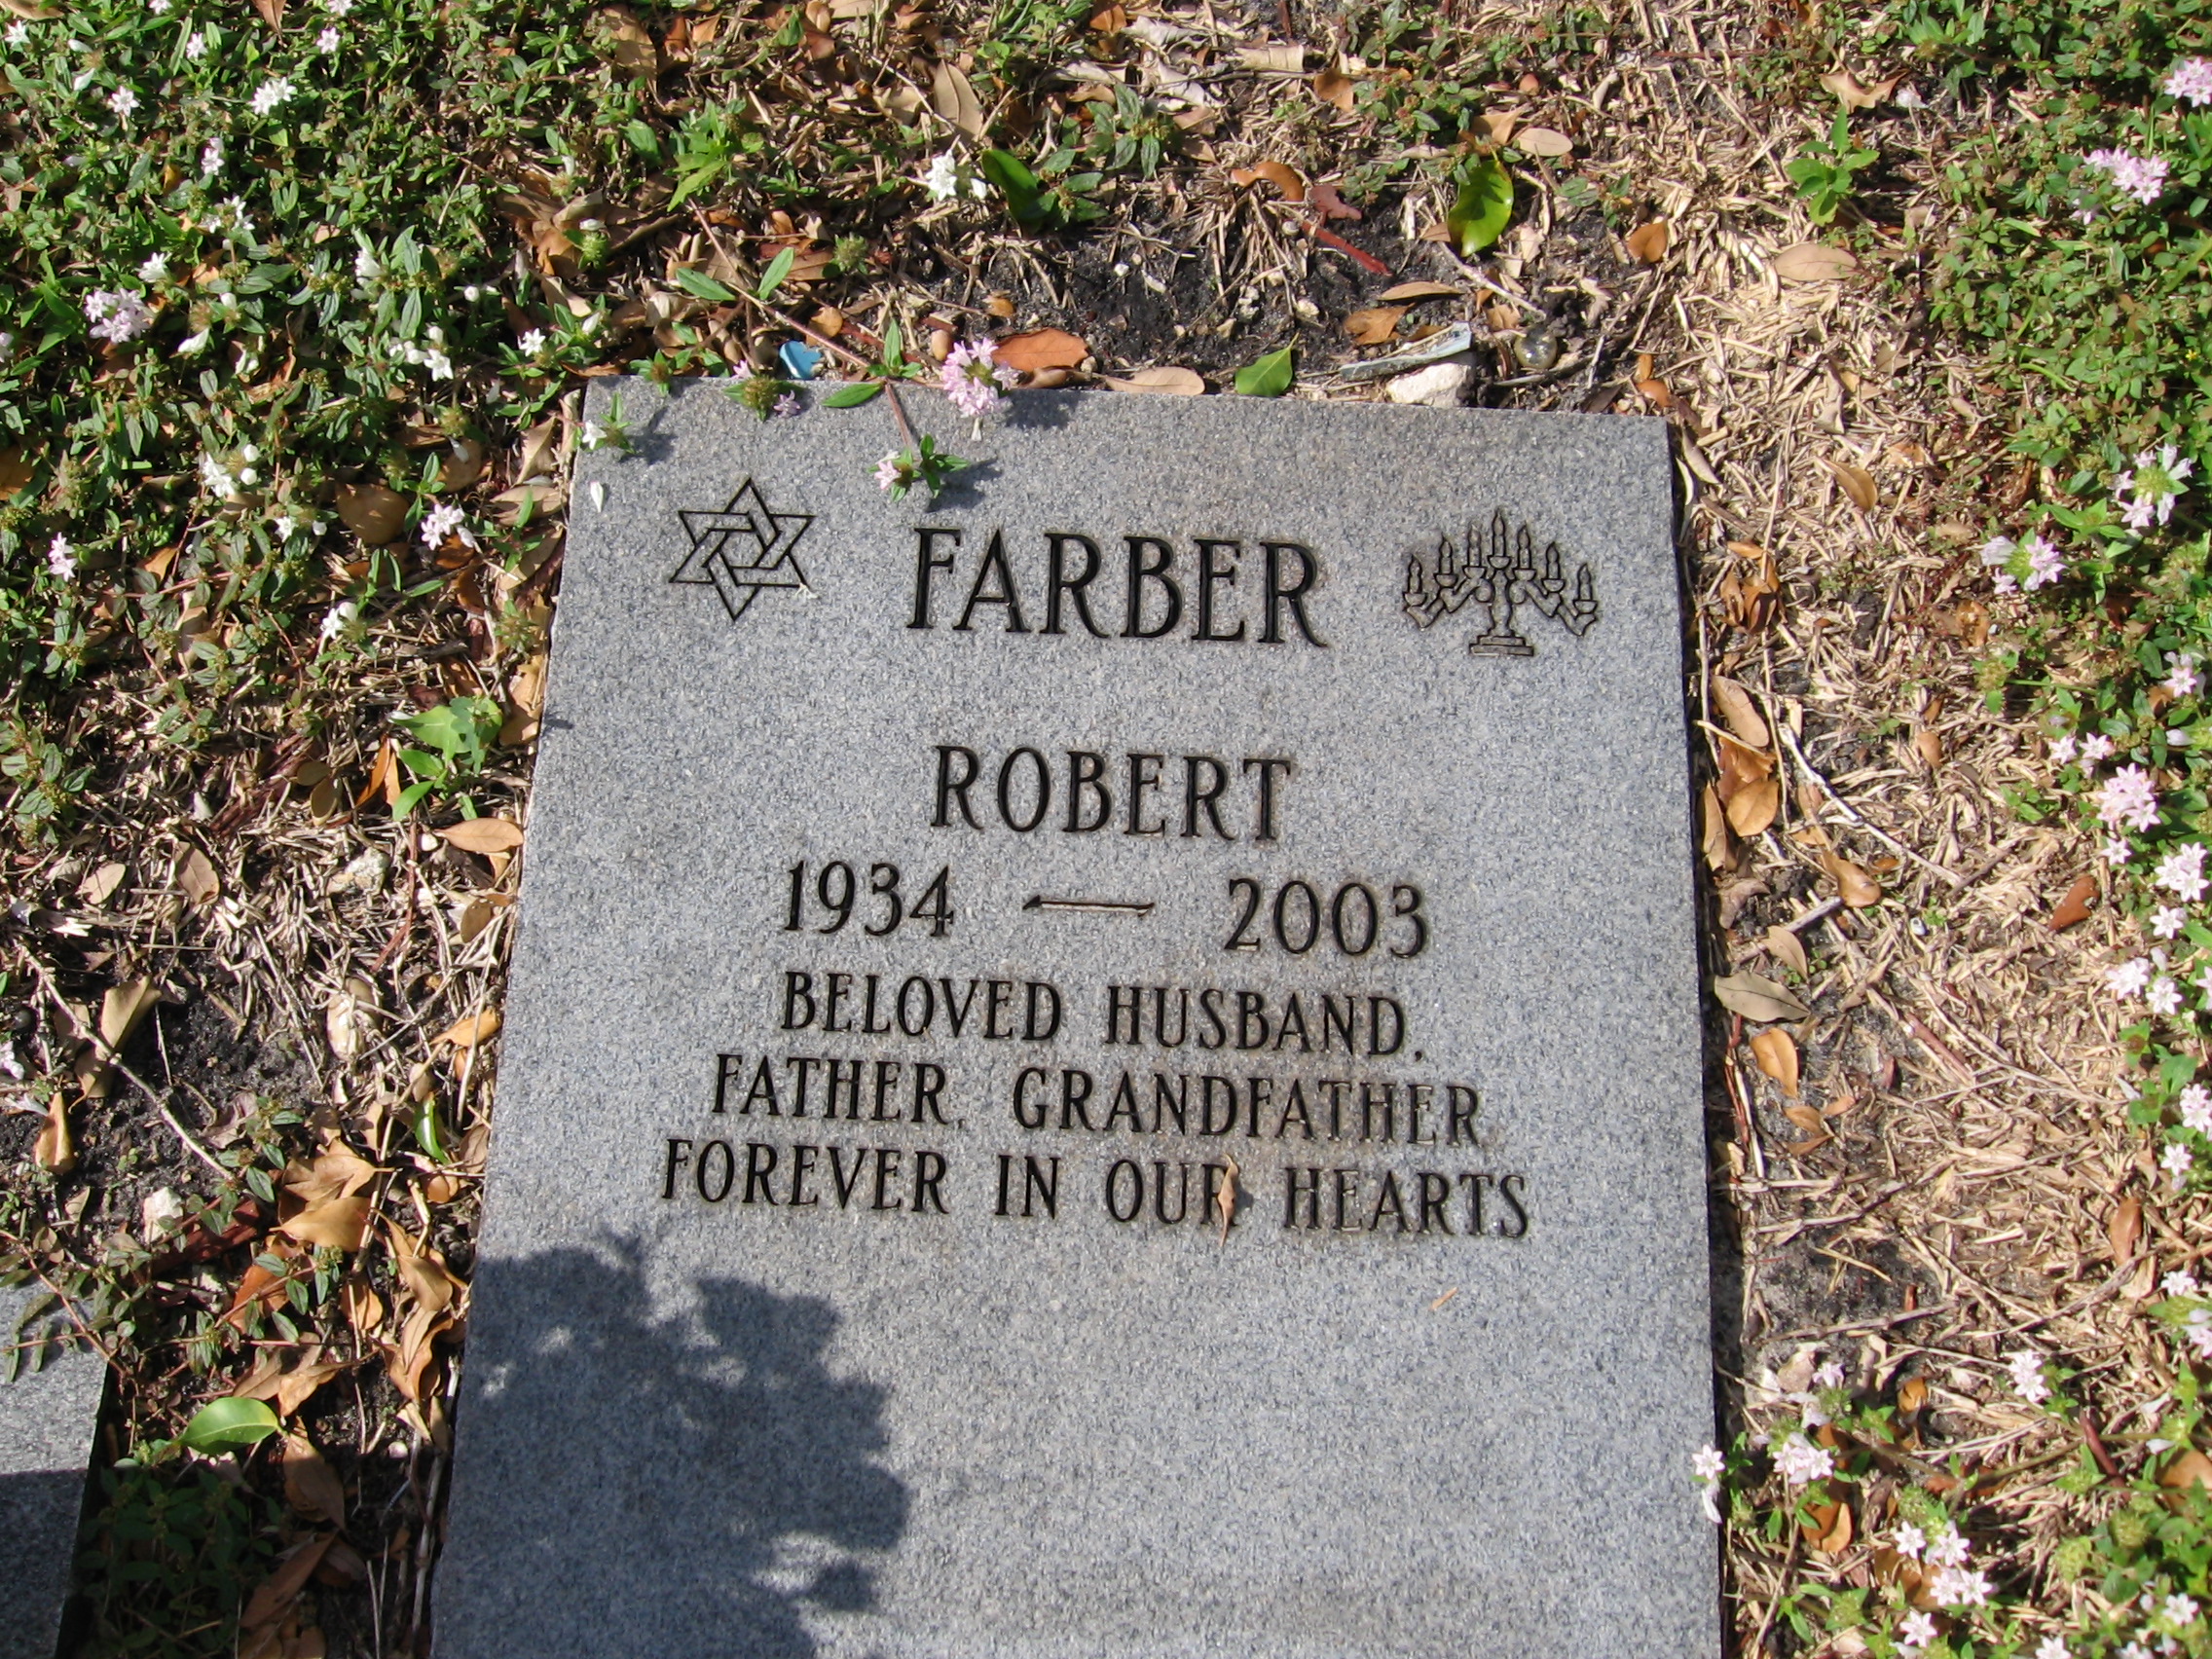 Robert Farber